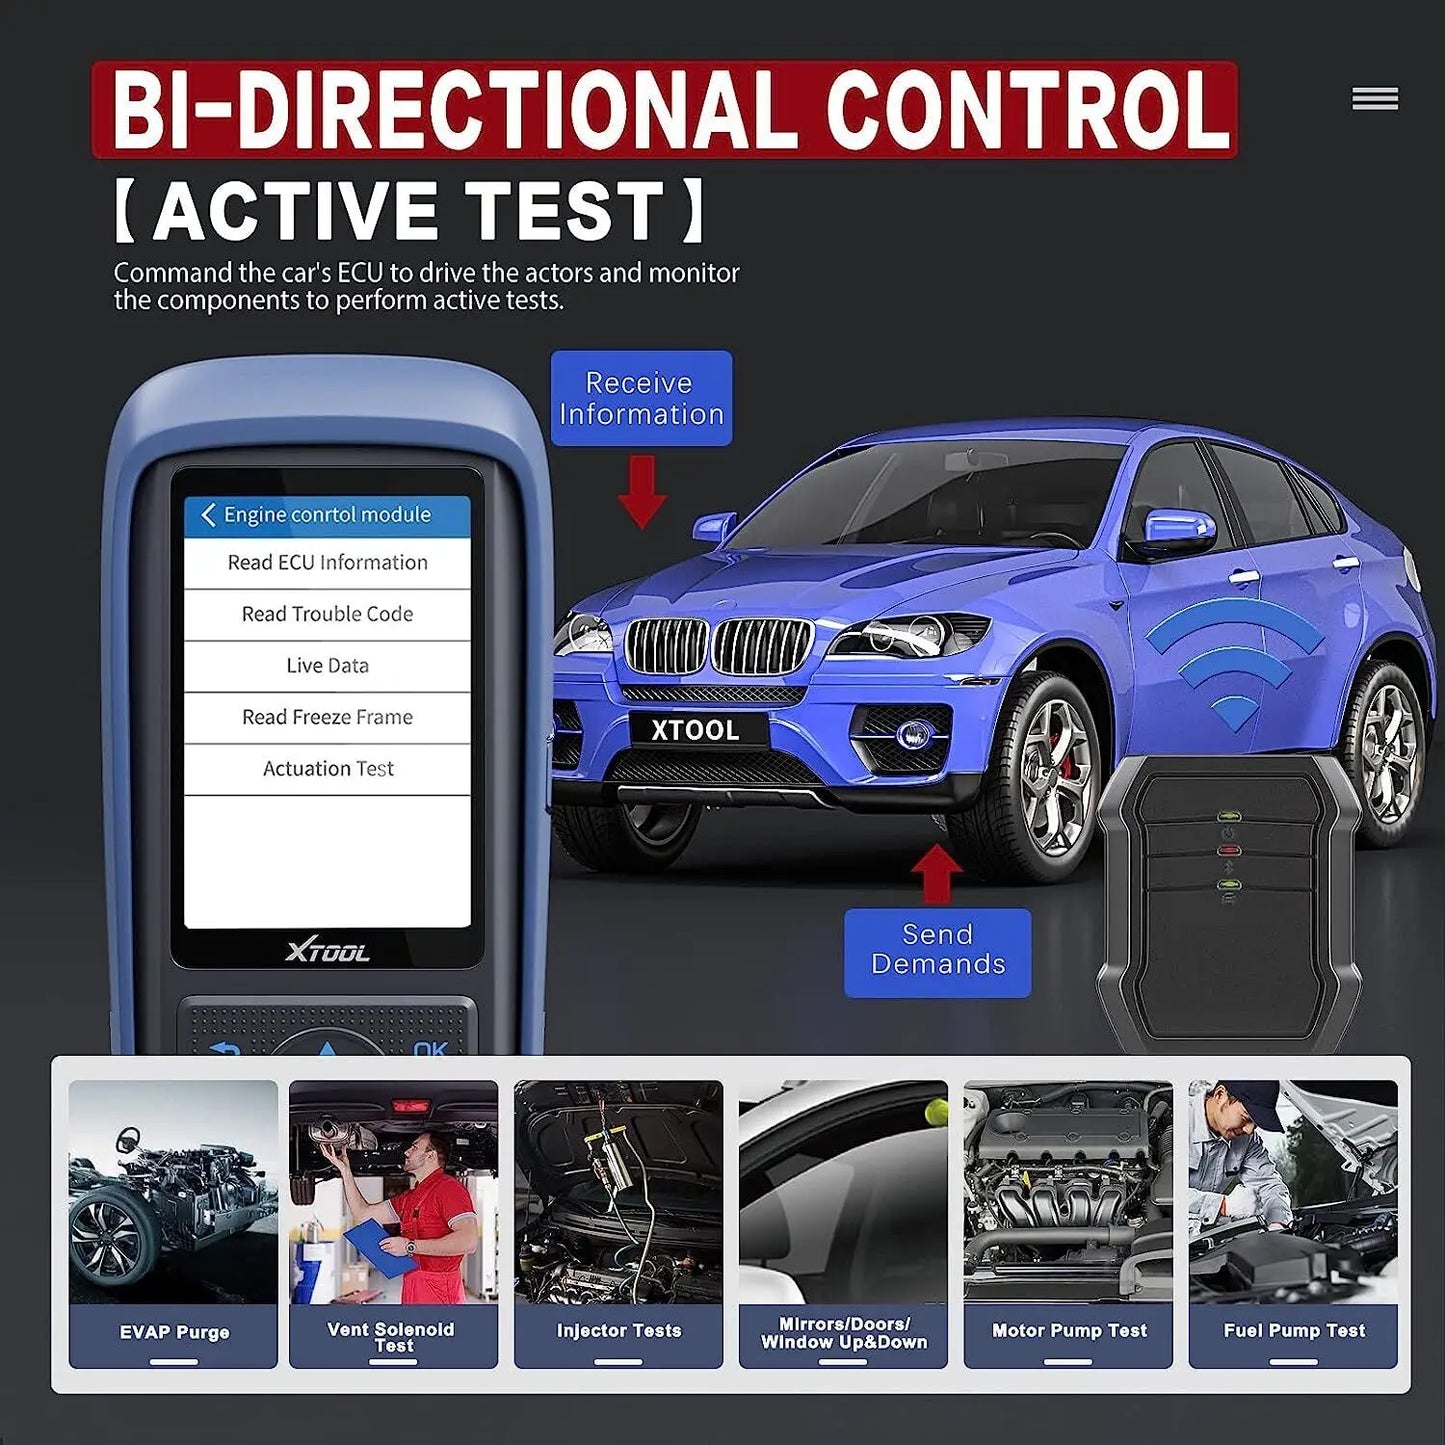 XTOOL A30pro Car Diagnostic Tools Bluetooth Car Automotive OBD2 Key Programmer Scanner Free Update Online - Dynamex